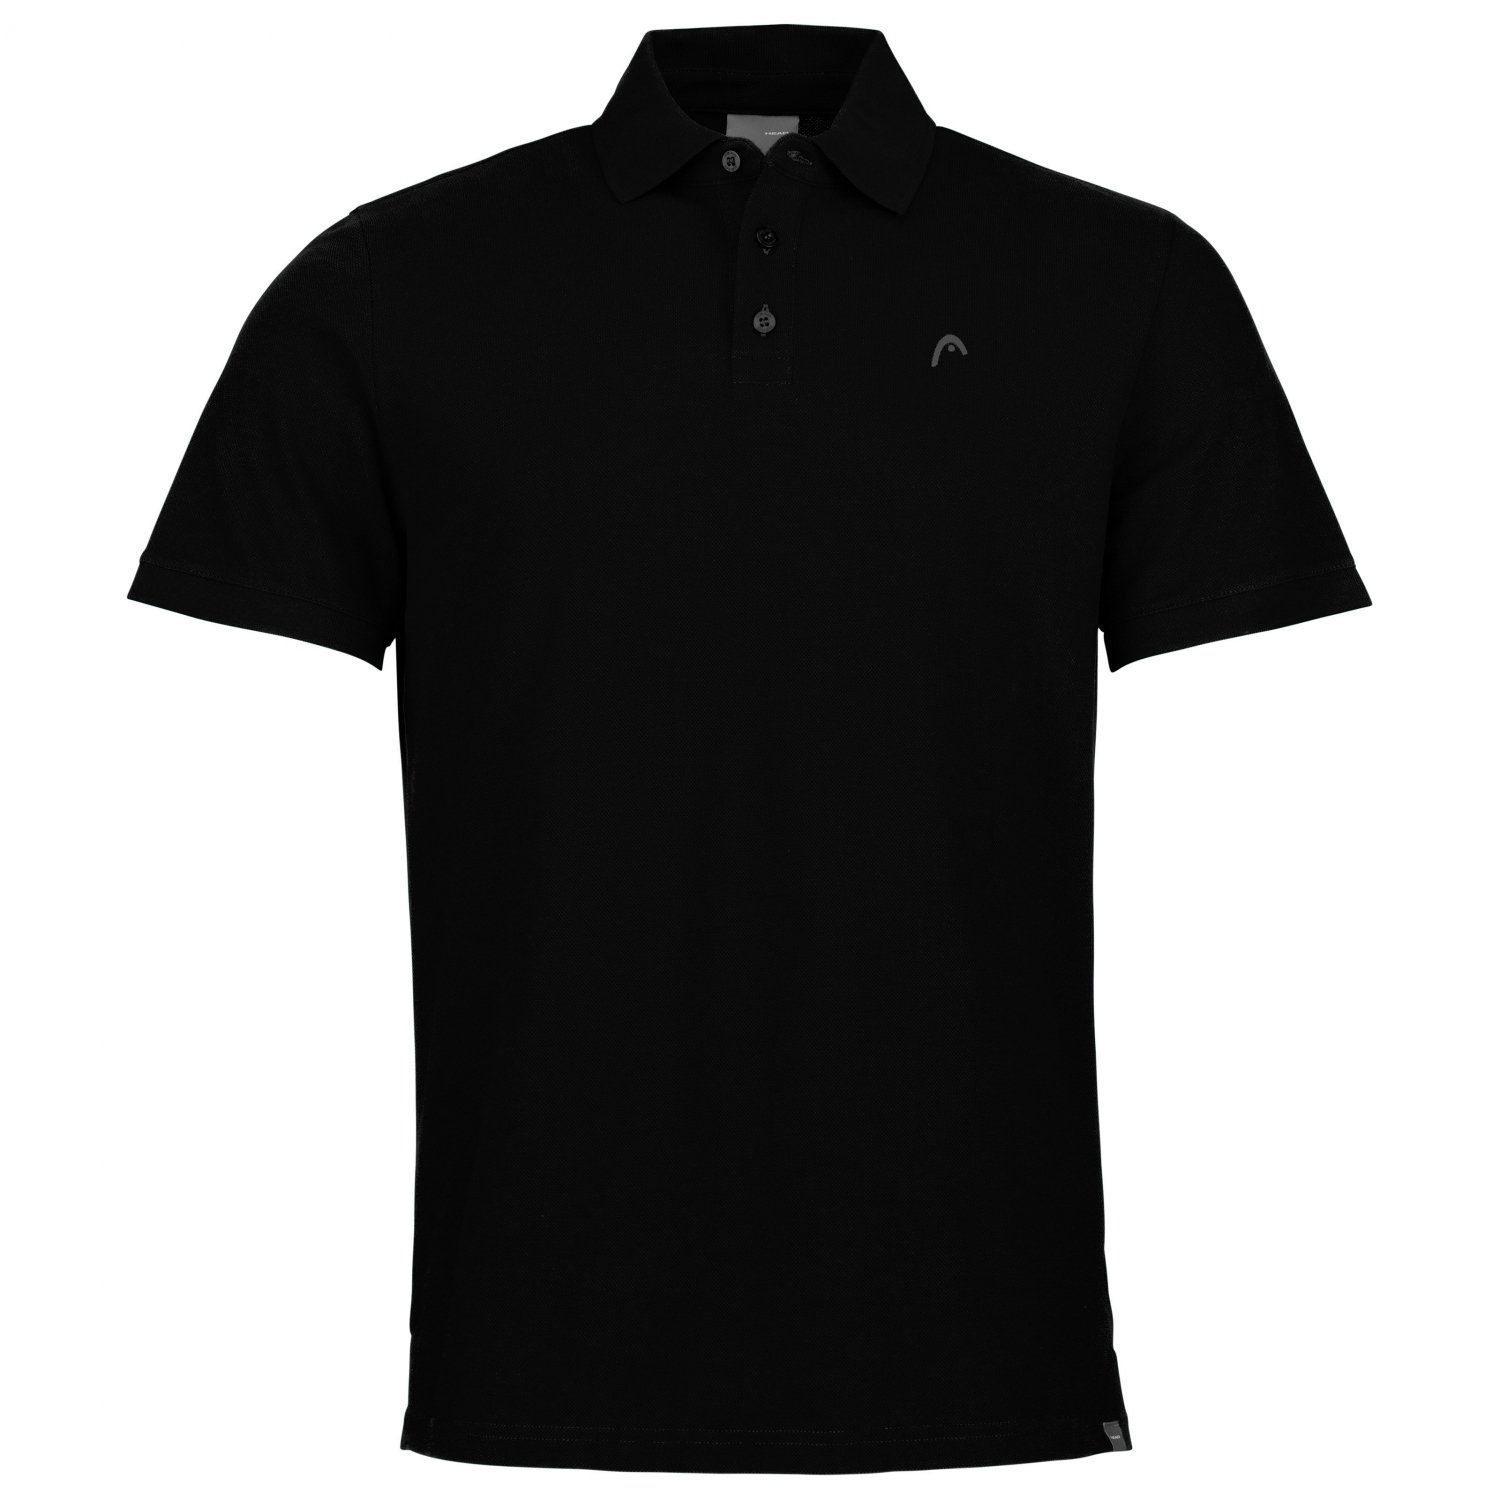 Herren Tennisshirt Shirt black Head Head Polo BK